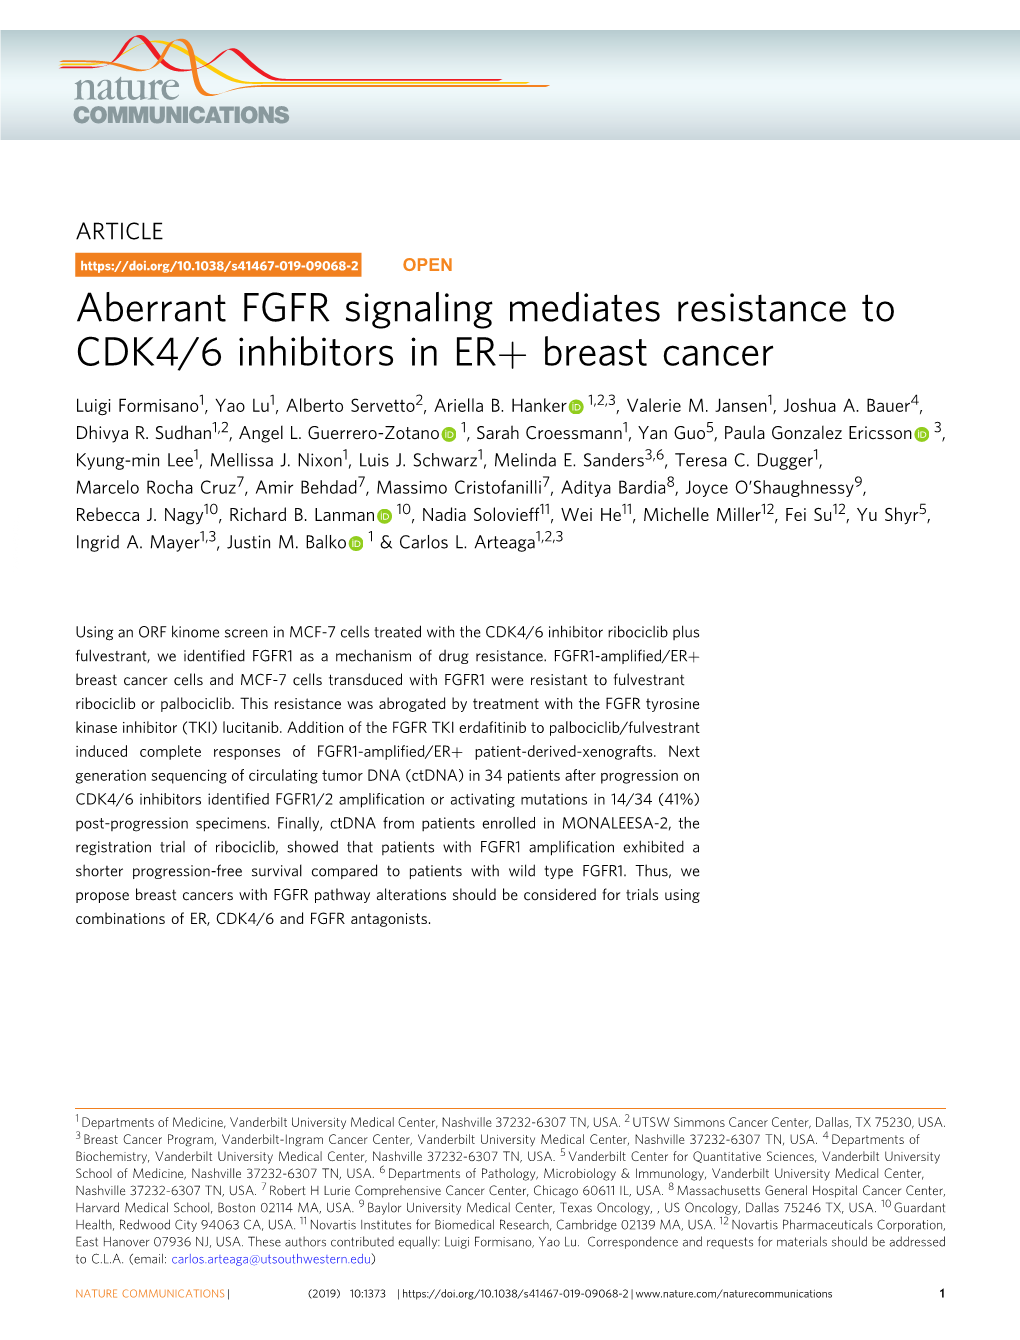 Aberrant FGFR Signaling Mediates Resistance to CDK4/6 Inhibitors in ER+ Breast Cancer